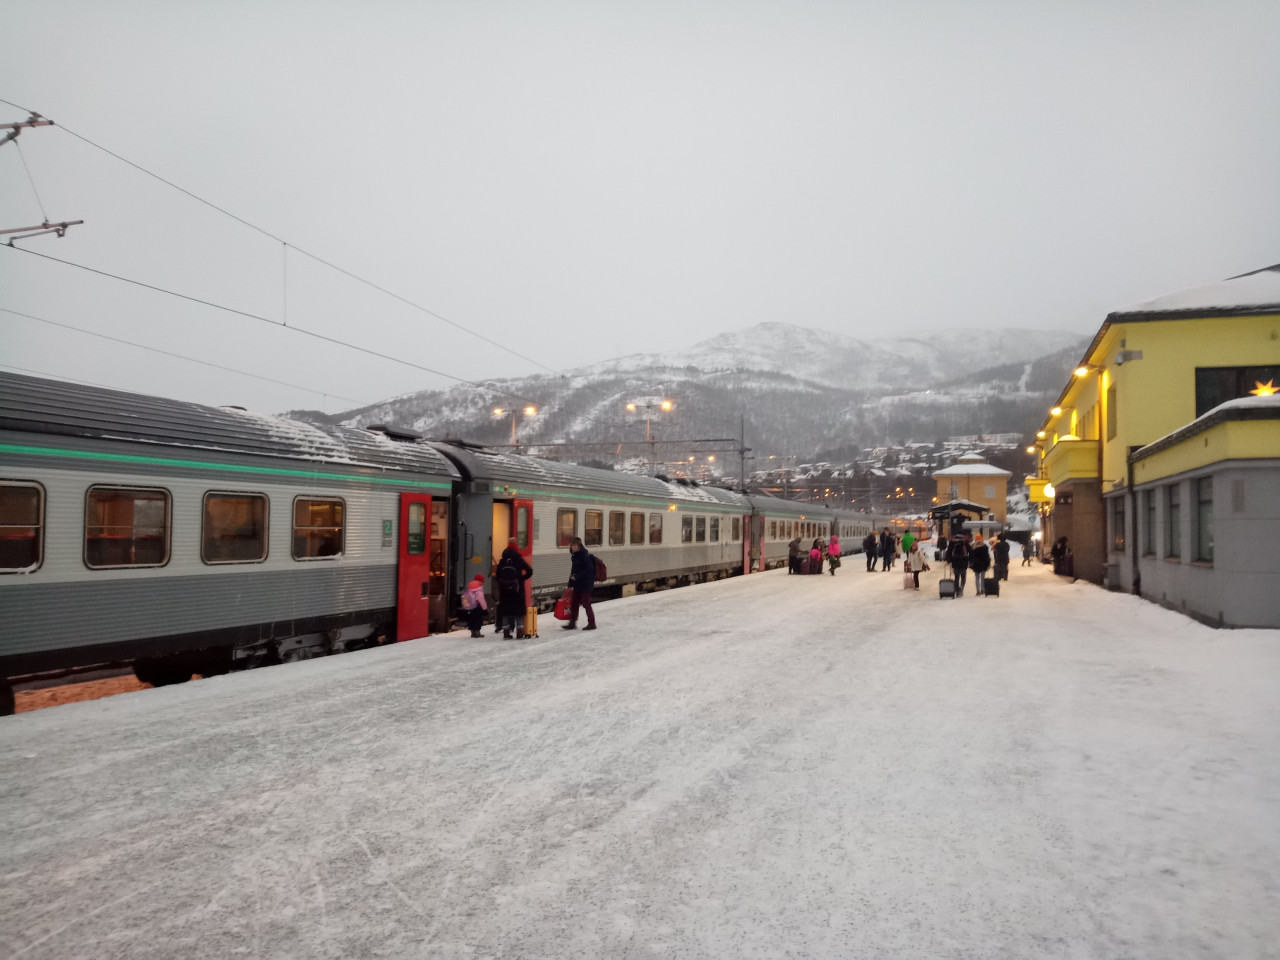 ndra v Narviku